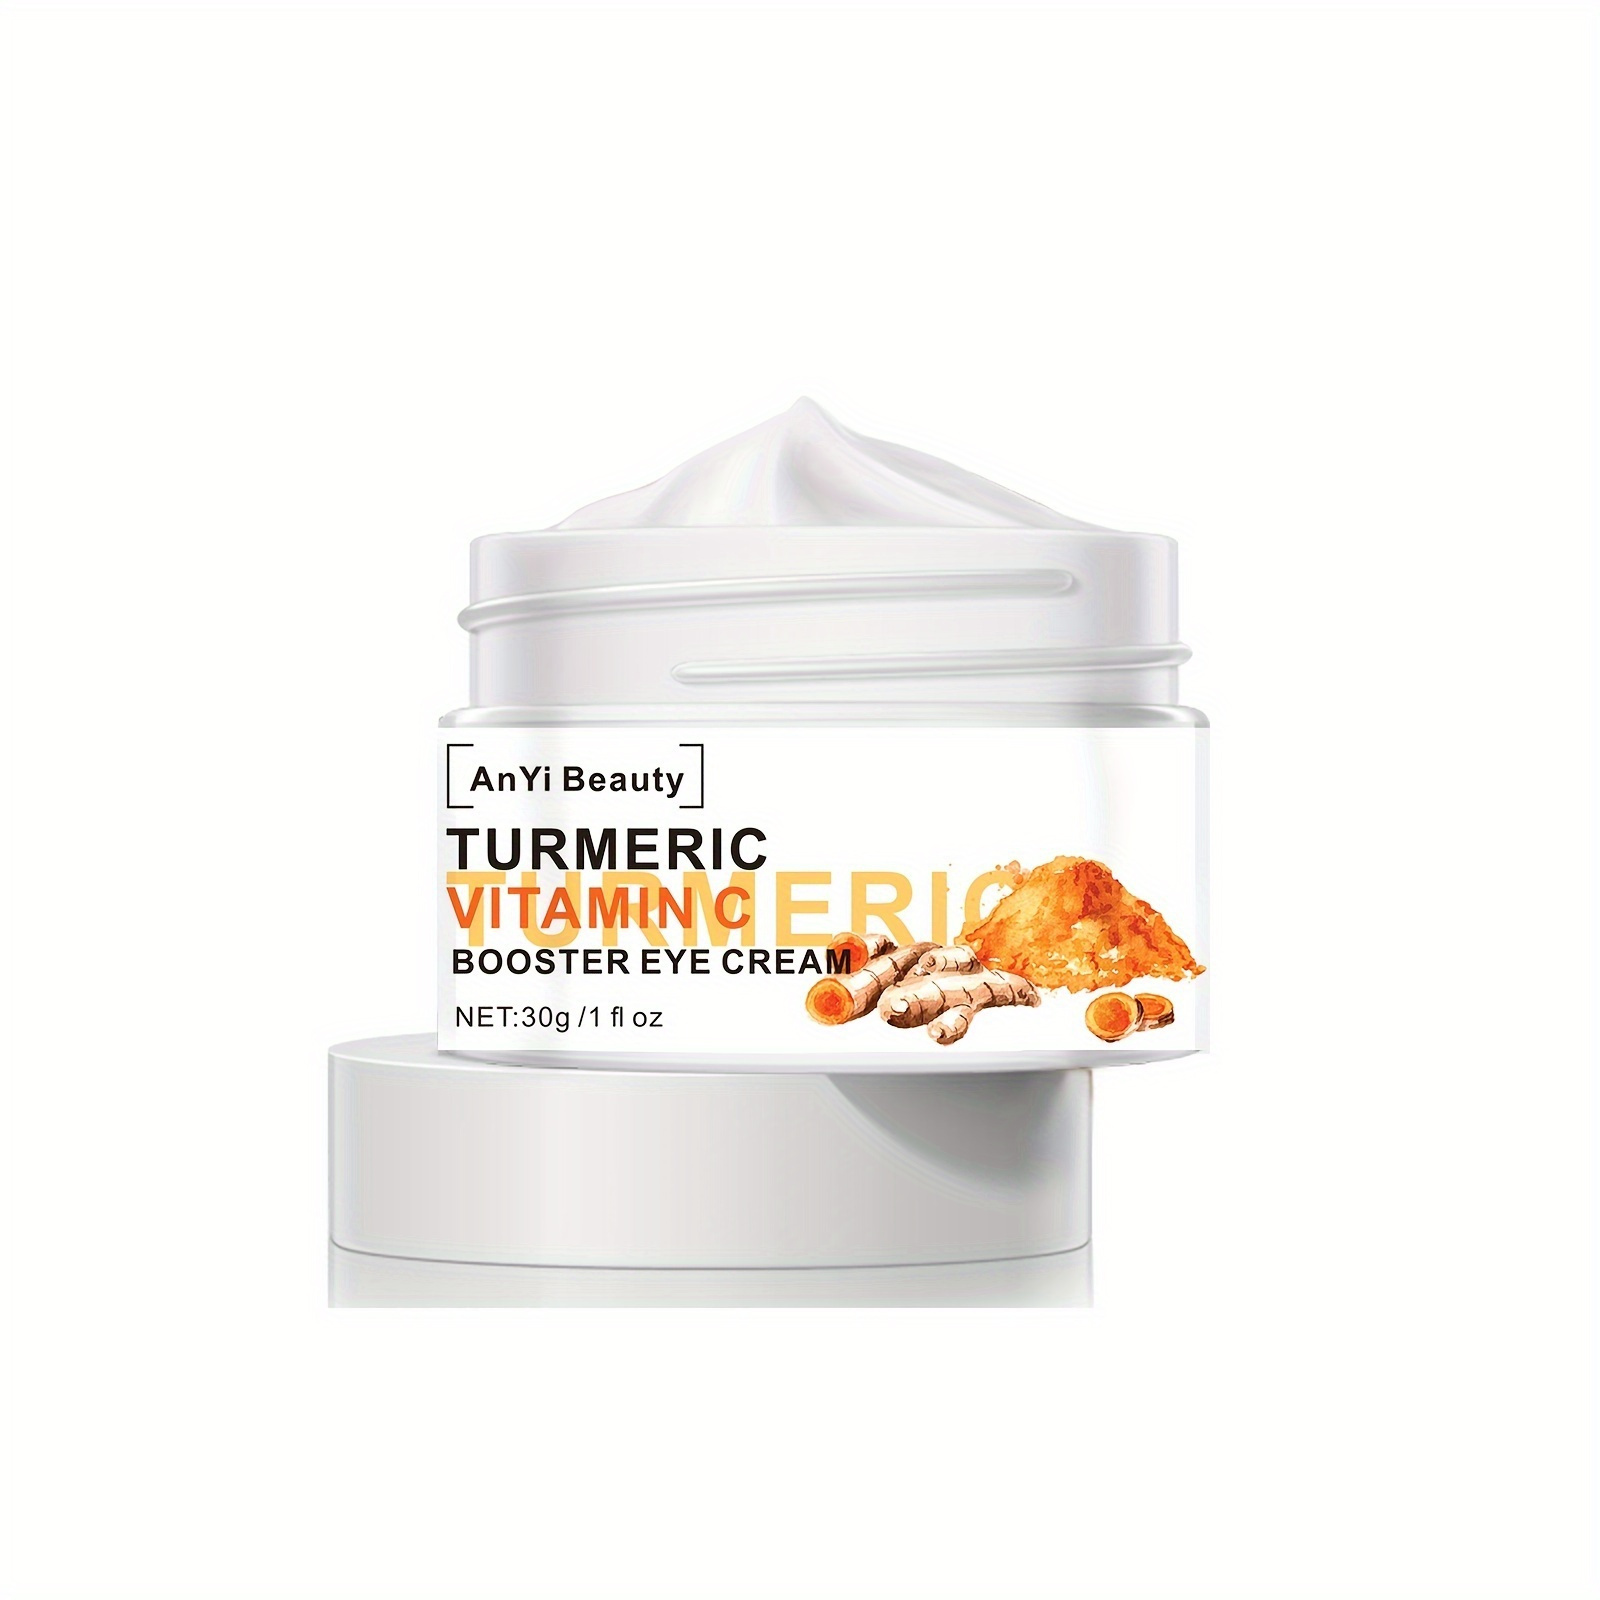 

Turmeric Vitamin C Eye Cream - Moisturize, Reduce Aging, Smooth Wrinkles, Firm Skin, Reduce Dark Circles & Eye Bags